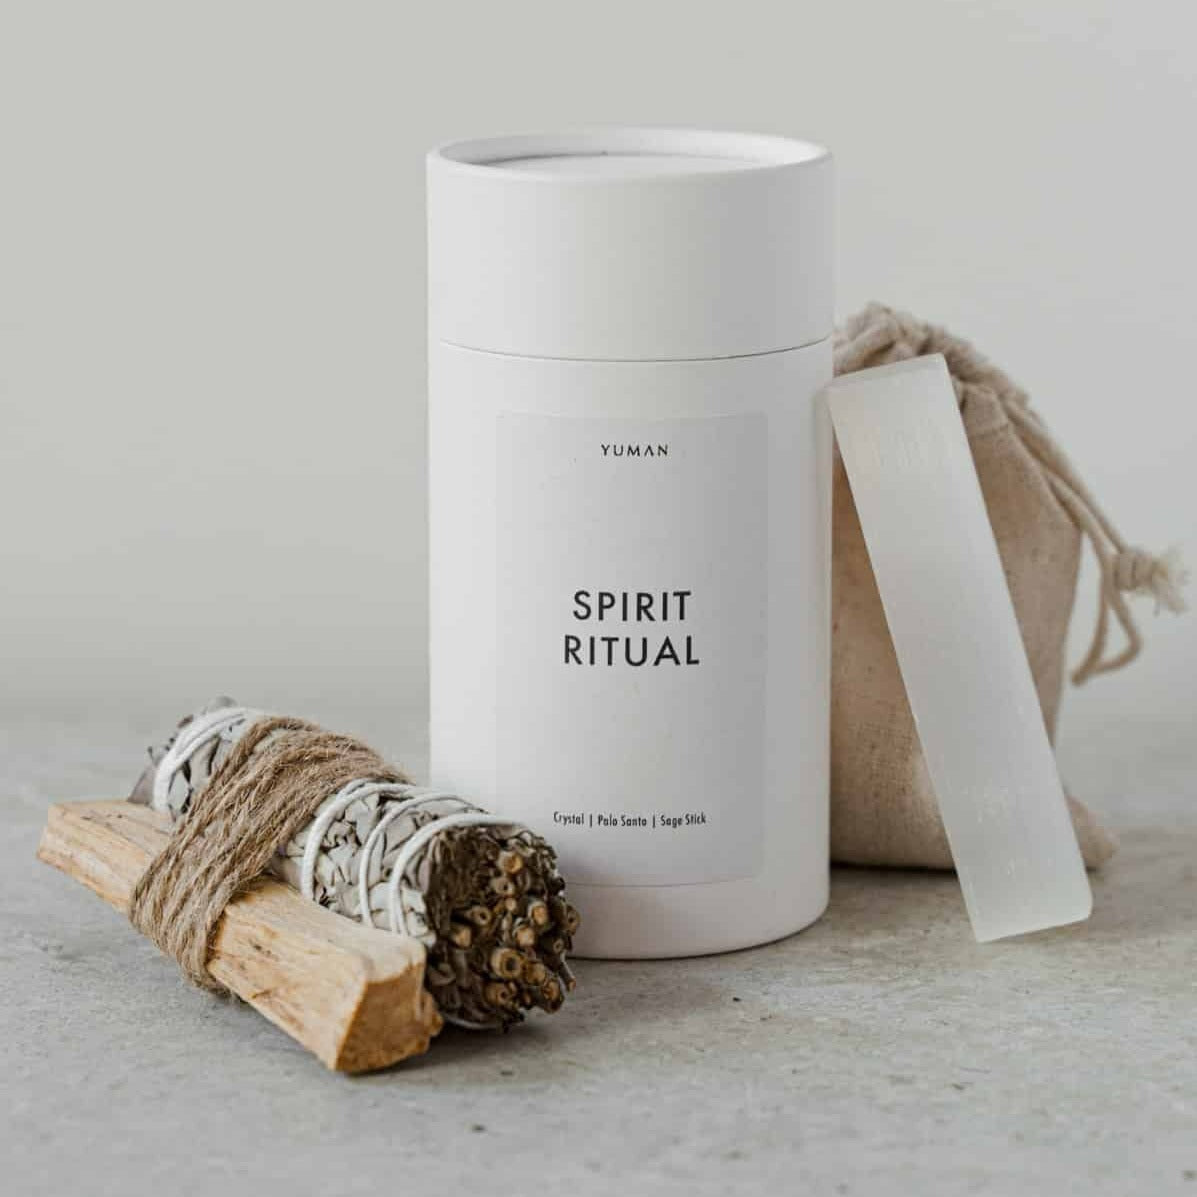 ritual kit to elevate your spirit